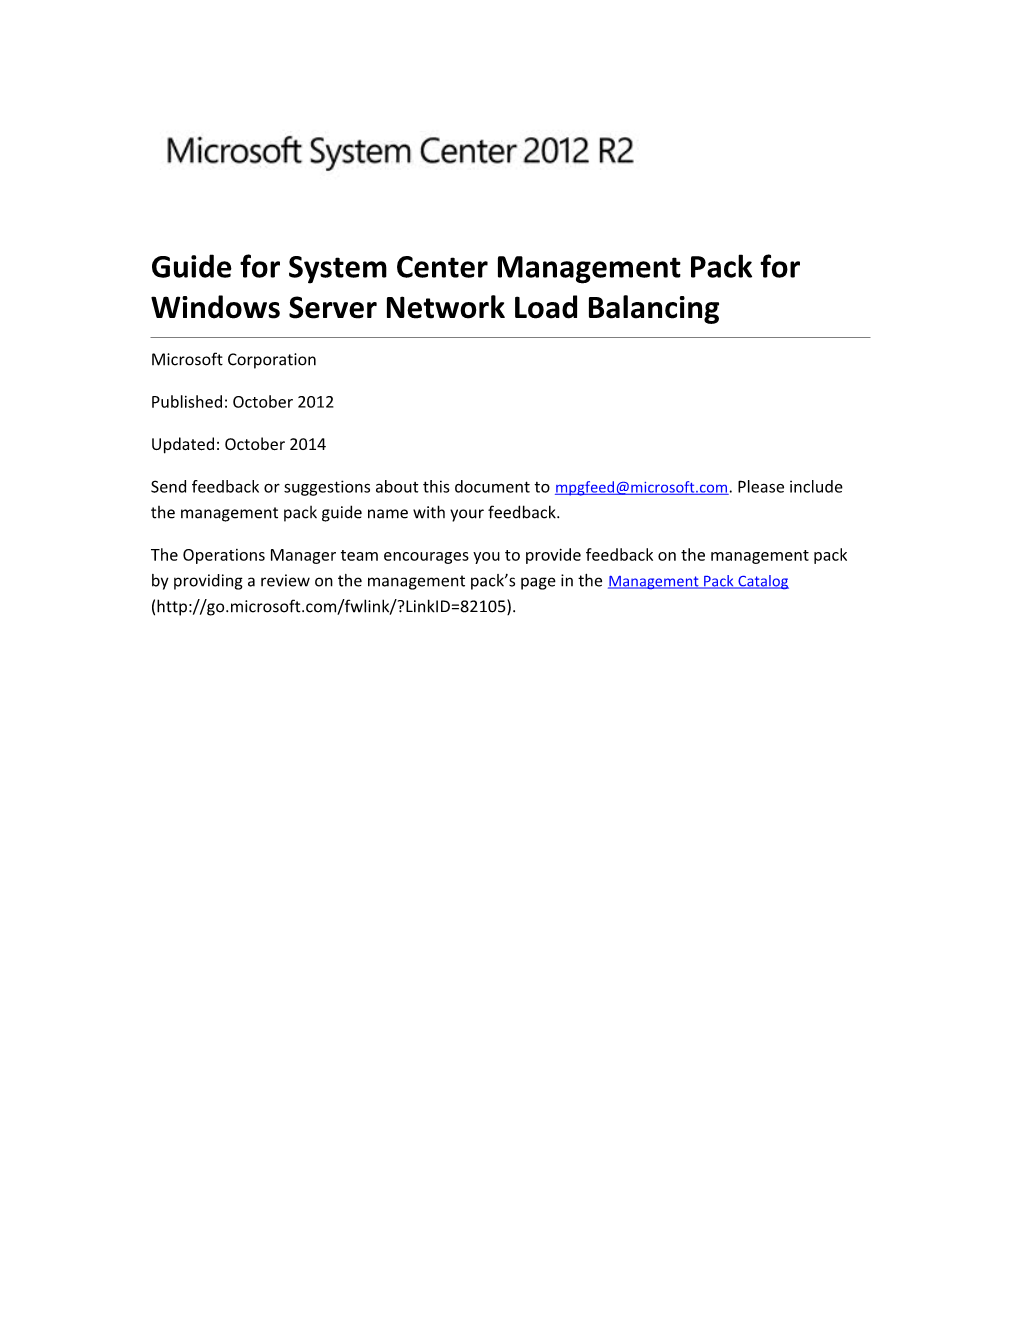 Guide for System Center Management Pack for Windows Server Network Load Balancing